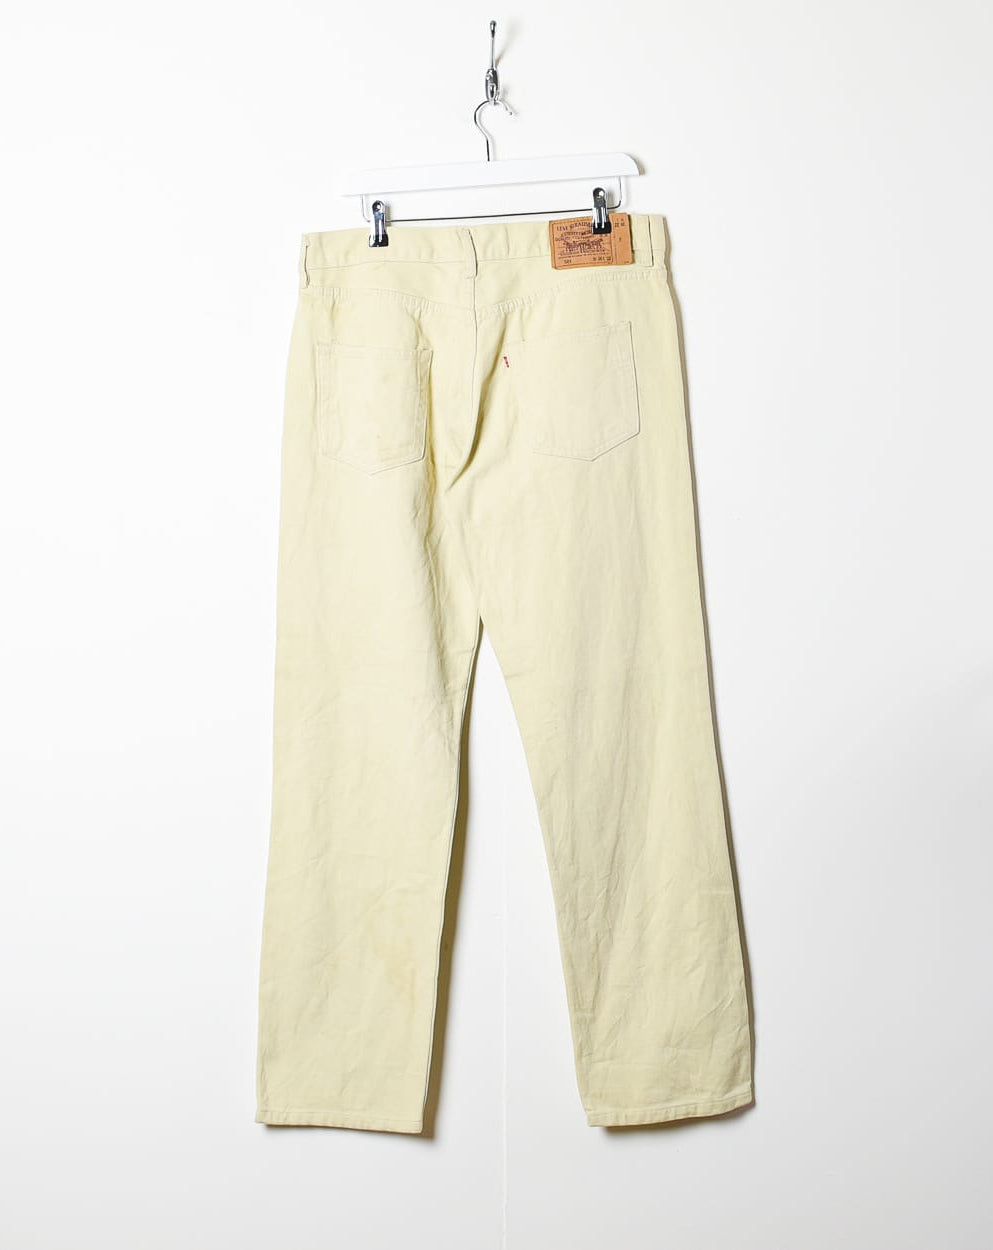 Neutral Levi's USA 501 Jeans - W35 L31